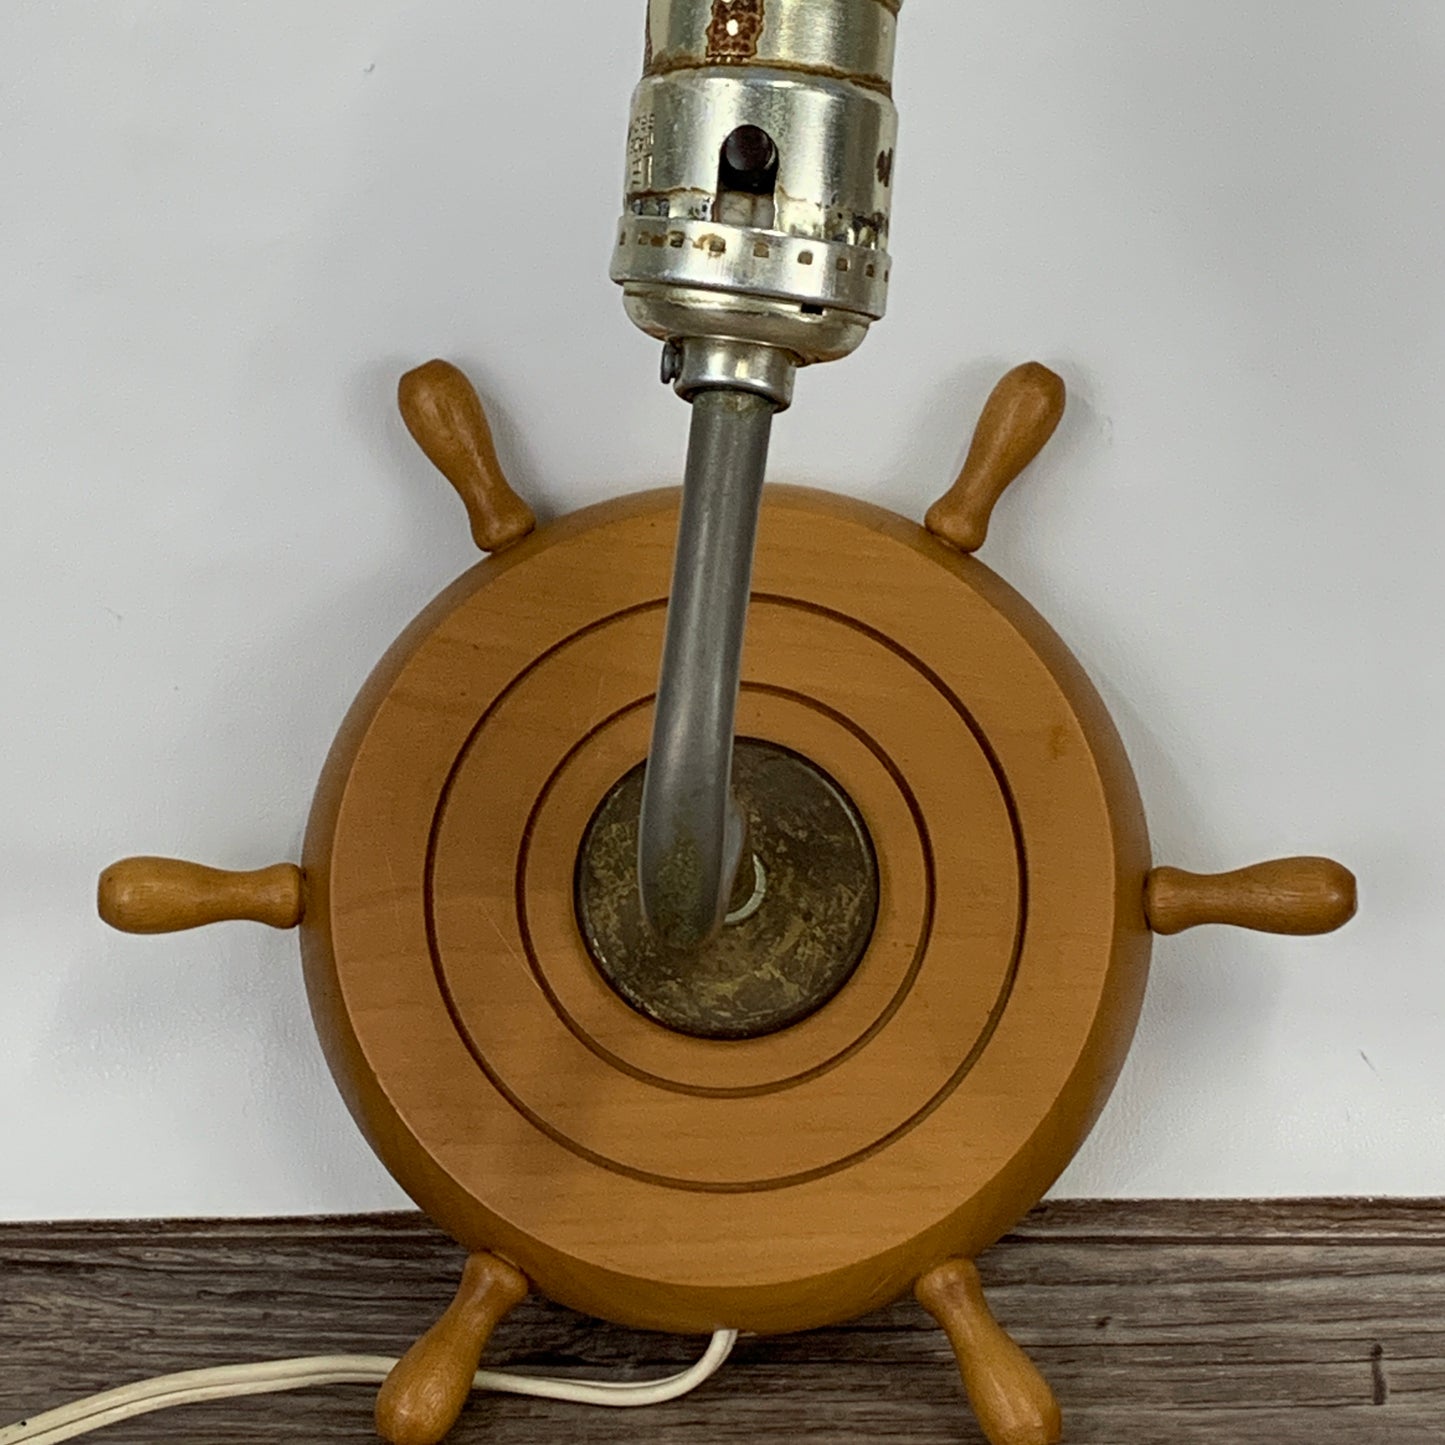 Ship's Wheel Vintage Lamp, Small Wooden Wall Lamp